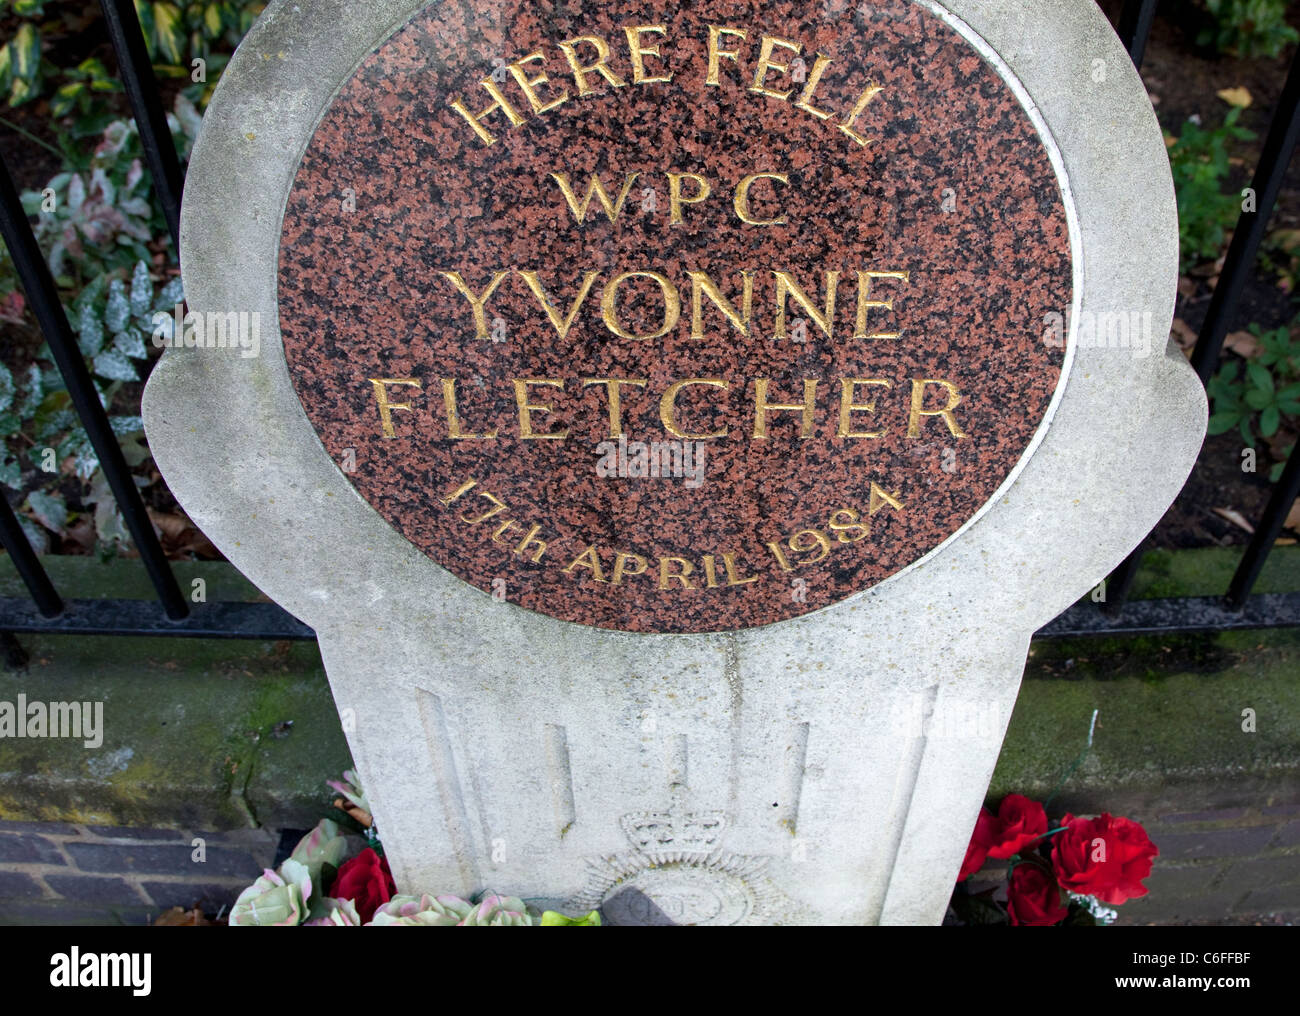 WPC Yvonne Fletcher memorial, St James's Square, London Stock Photo